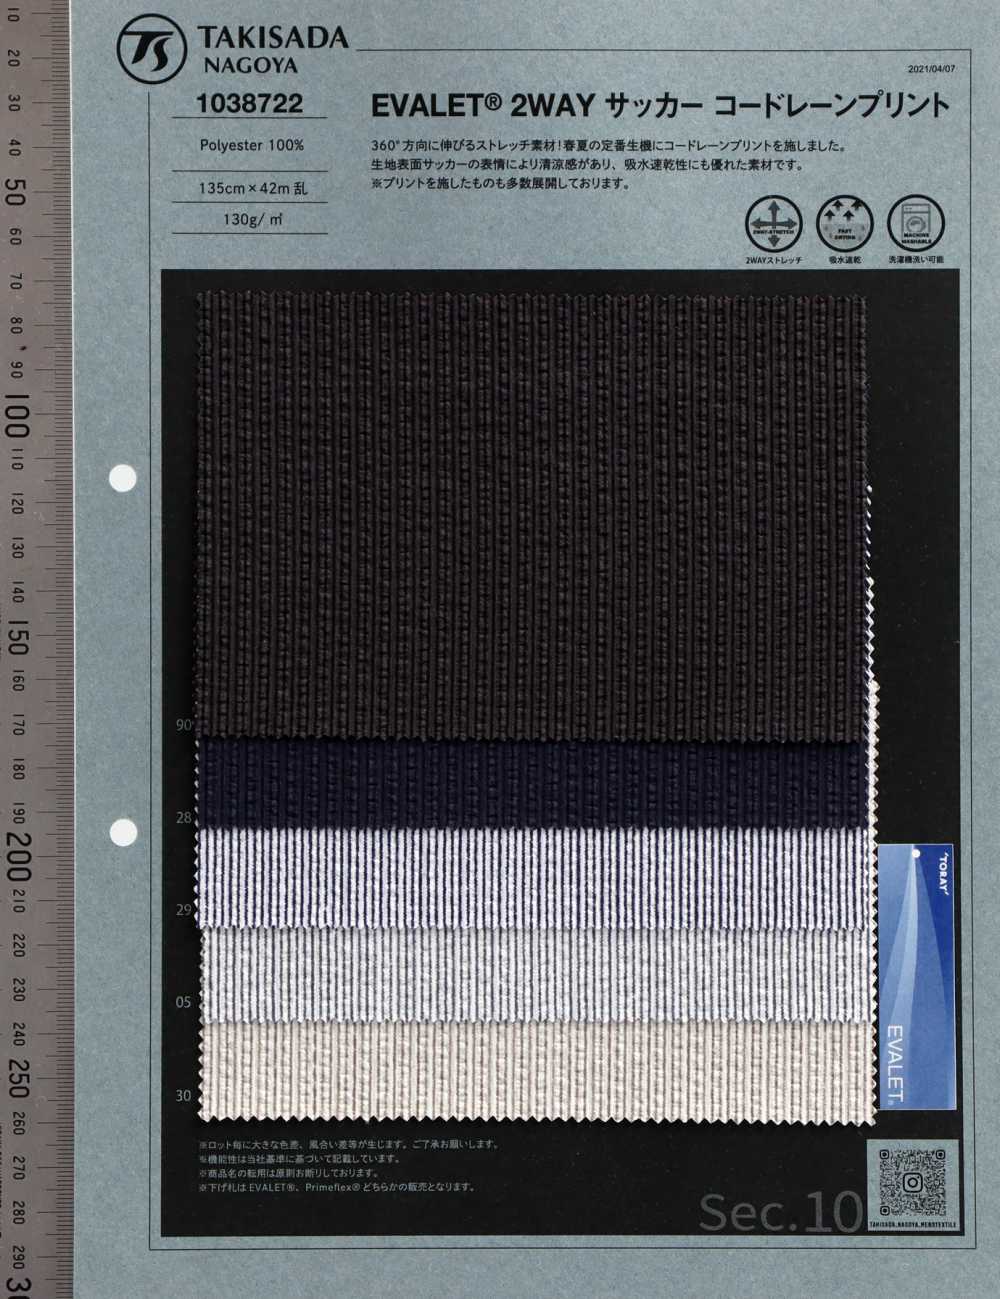 1038722 EVALET® 2WAY Seersucker Stripe Padrão[Têxtil / Tecido] Takisada Nagoya